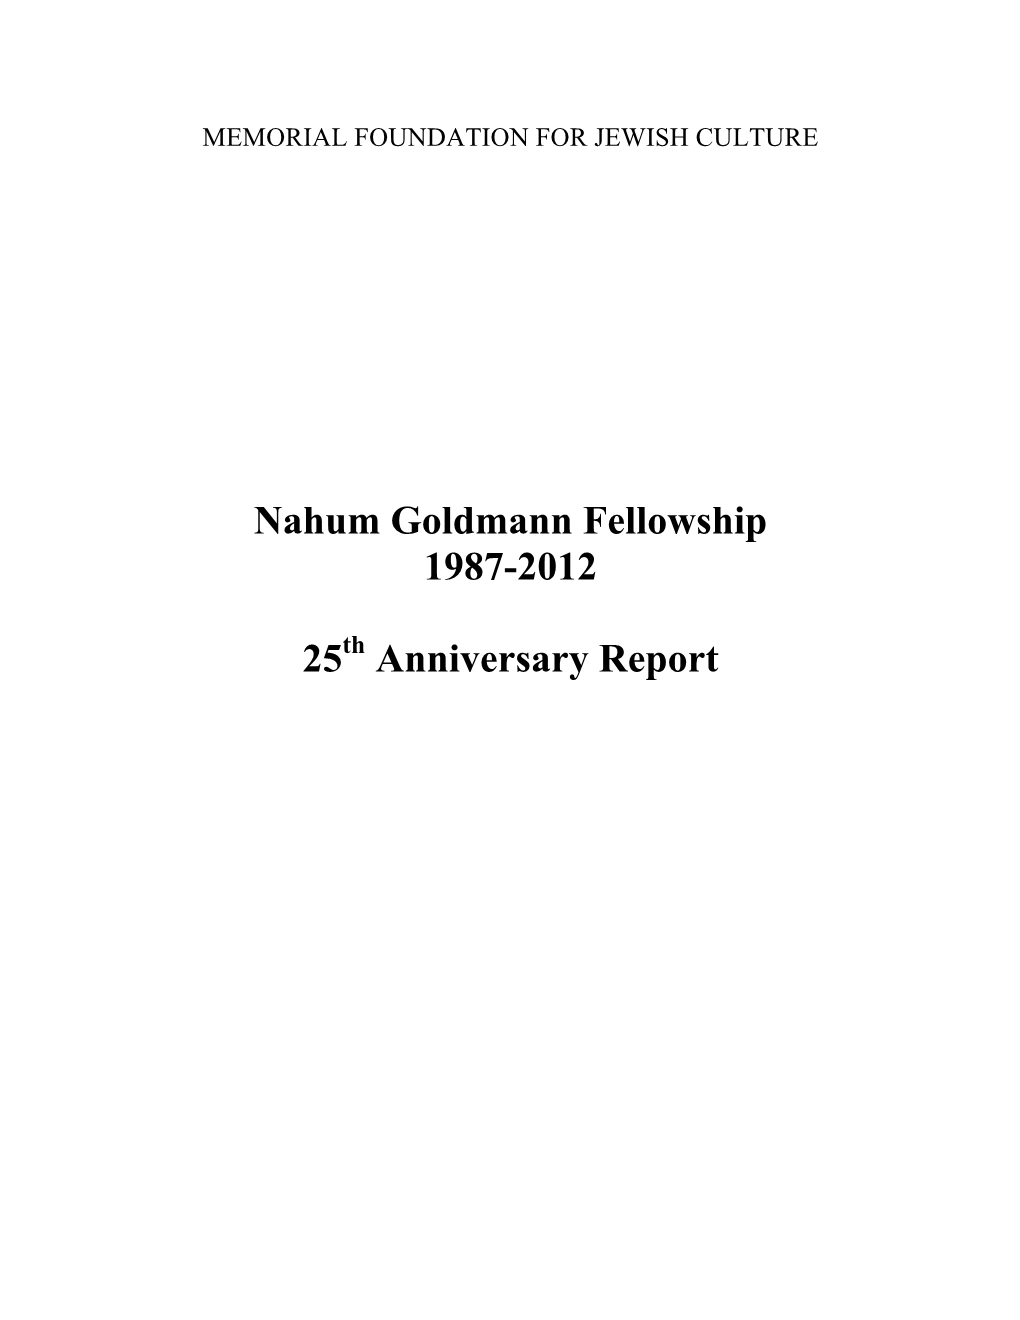 Nahum Goldmann Fellowship 1987-2012 25